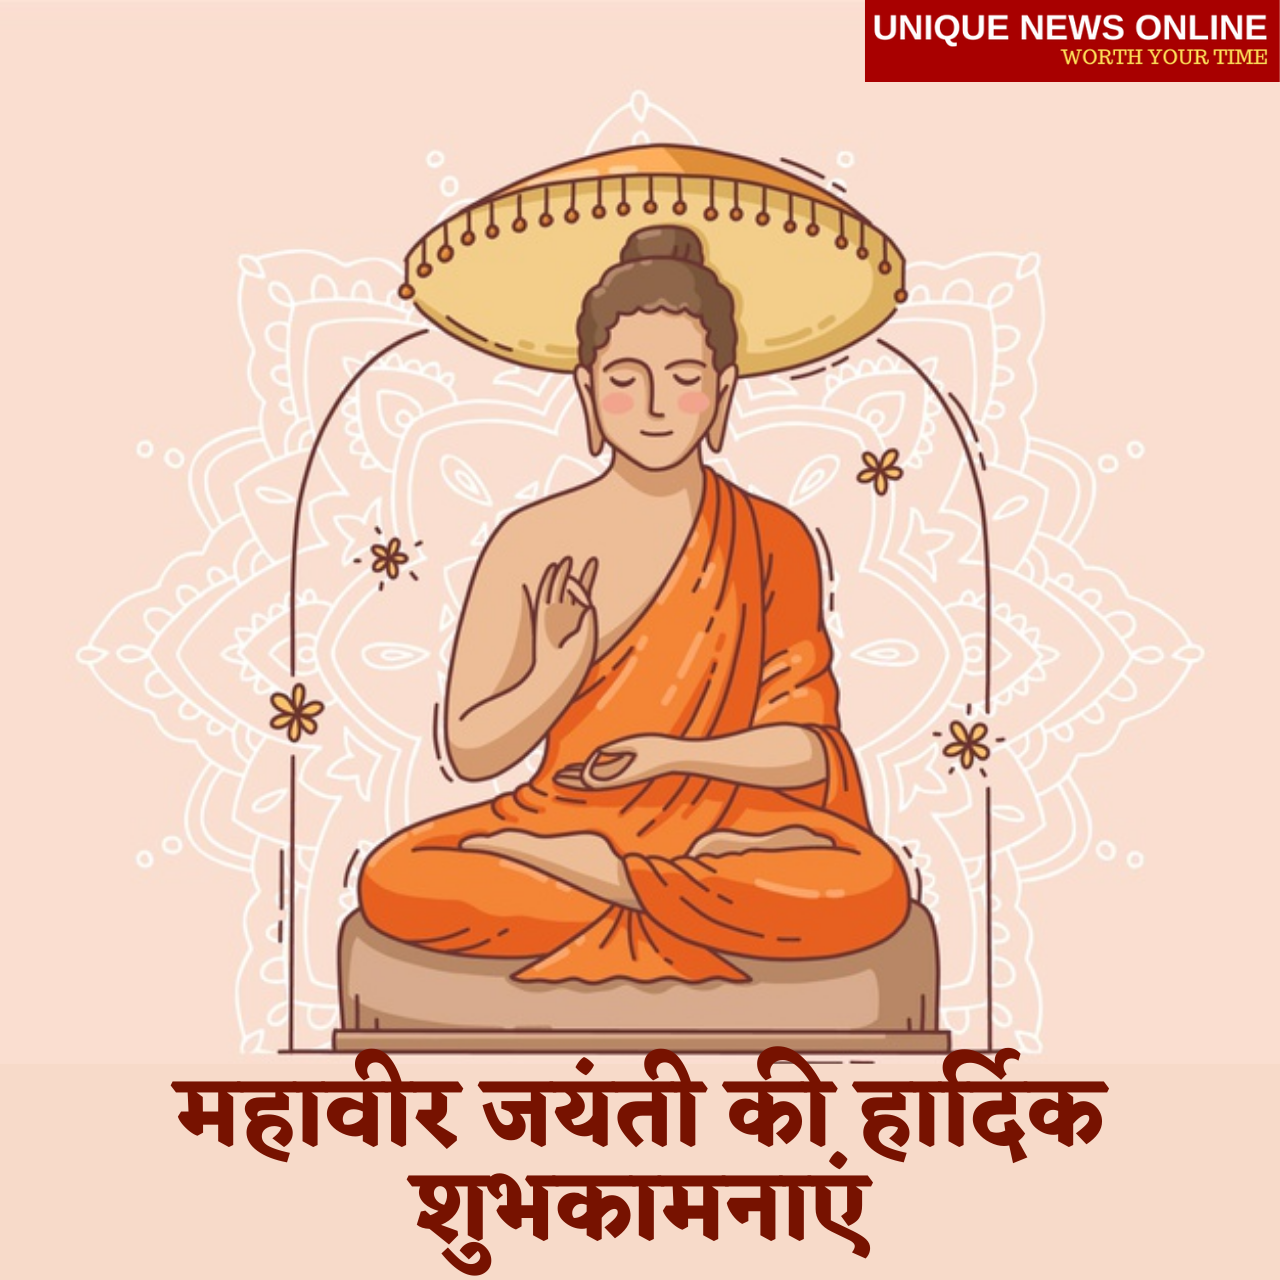 Happy Mahavir Jayanti 2021 Wishes in Hindi, Messages, Greetings, Quotes, and Images to Share Mahavir Janma Kalyanak